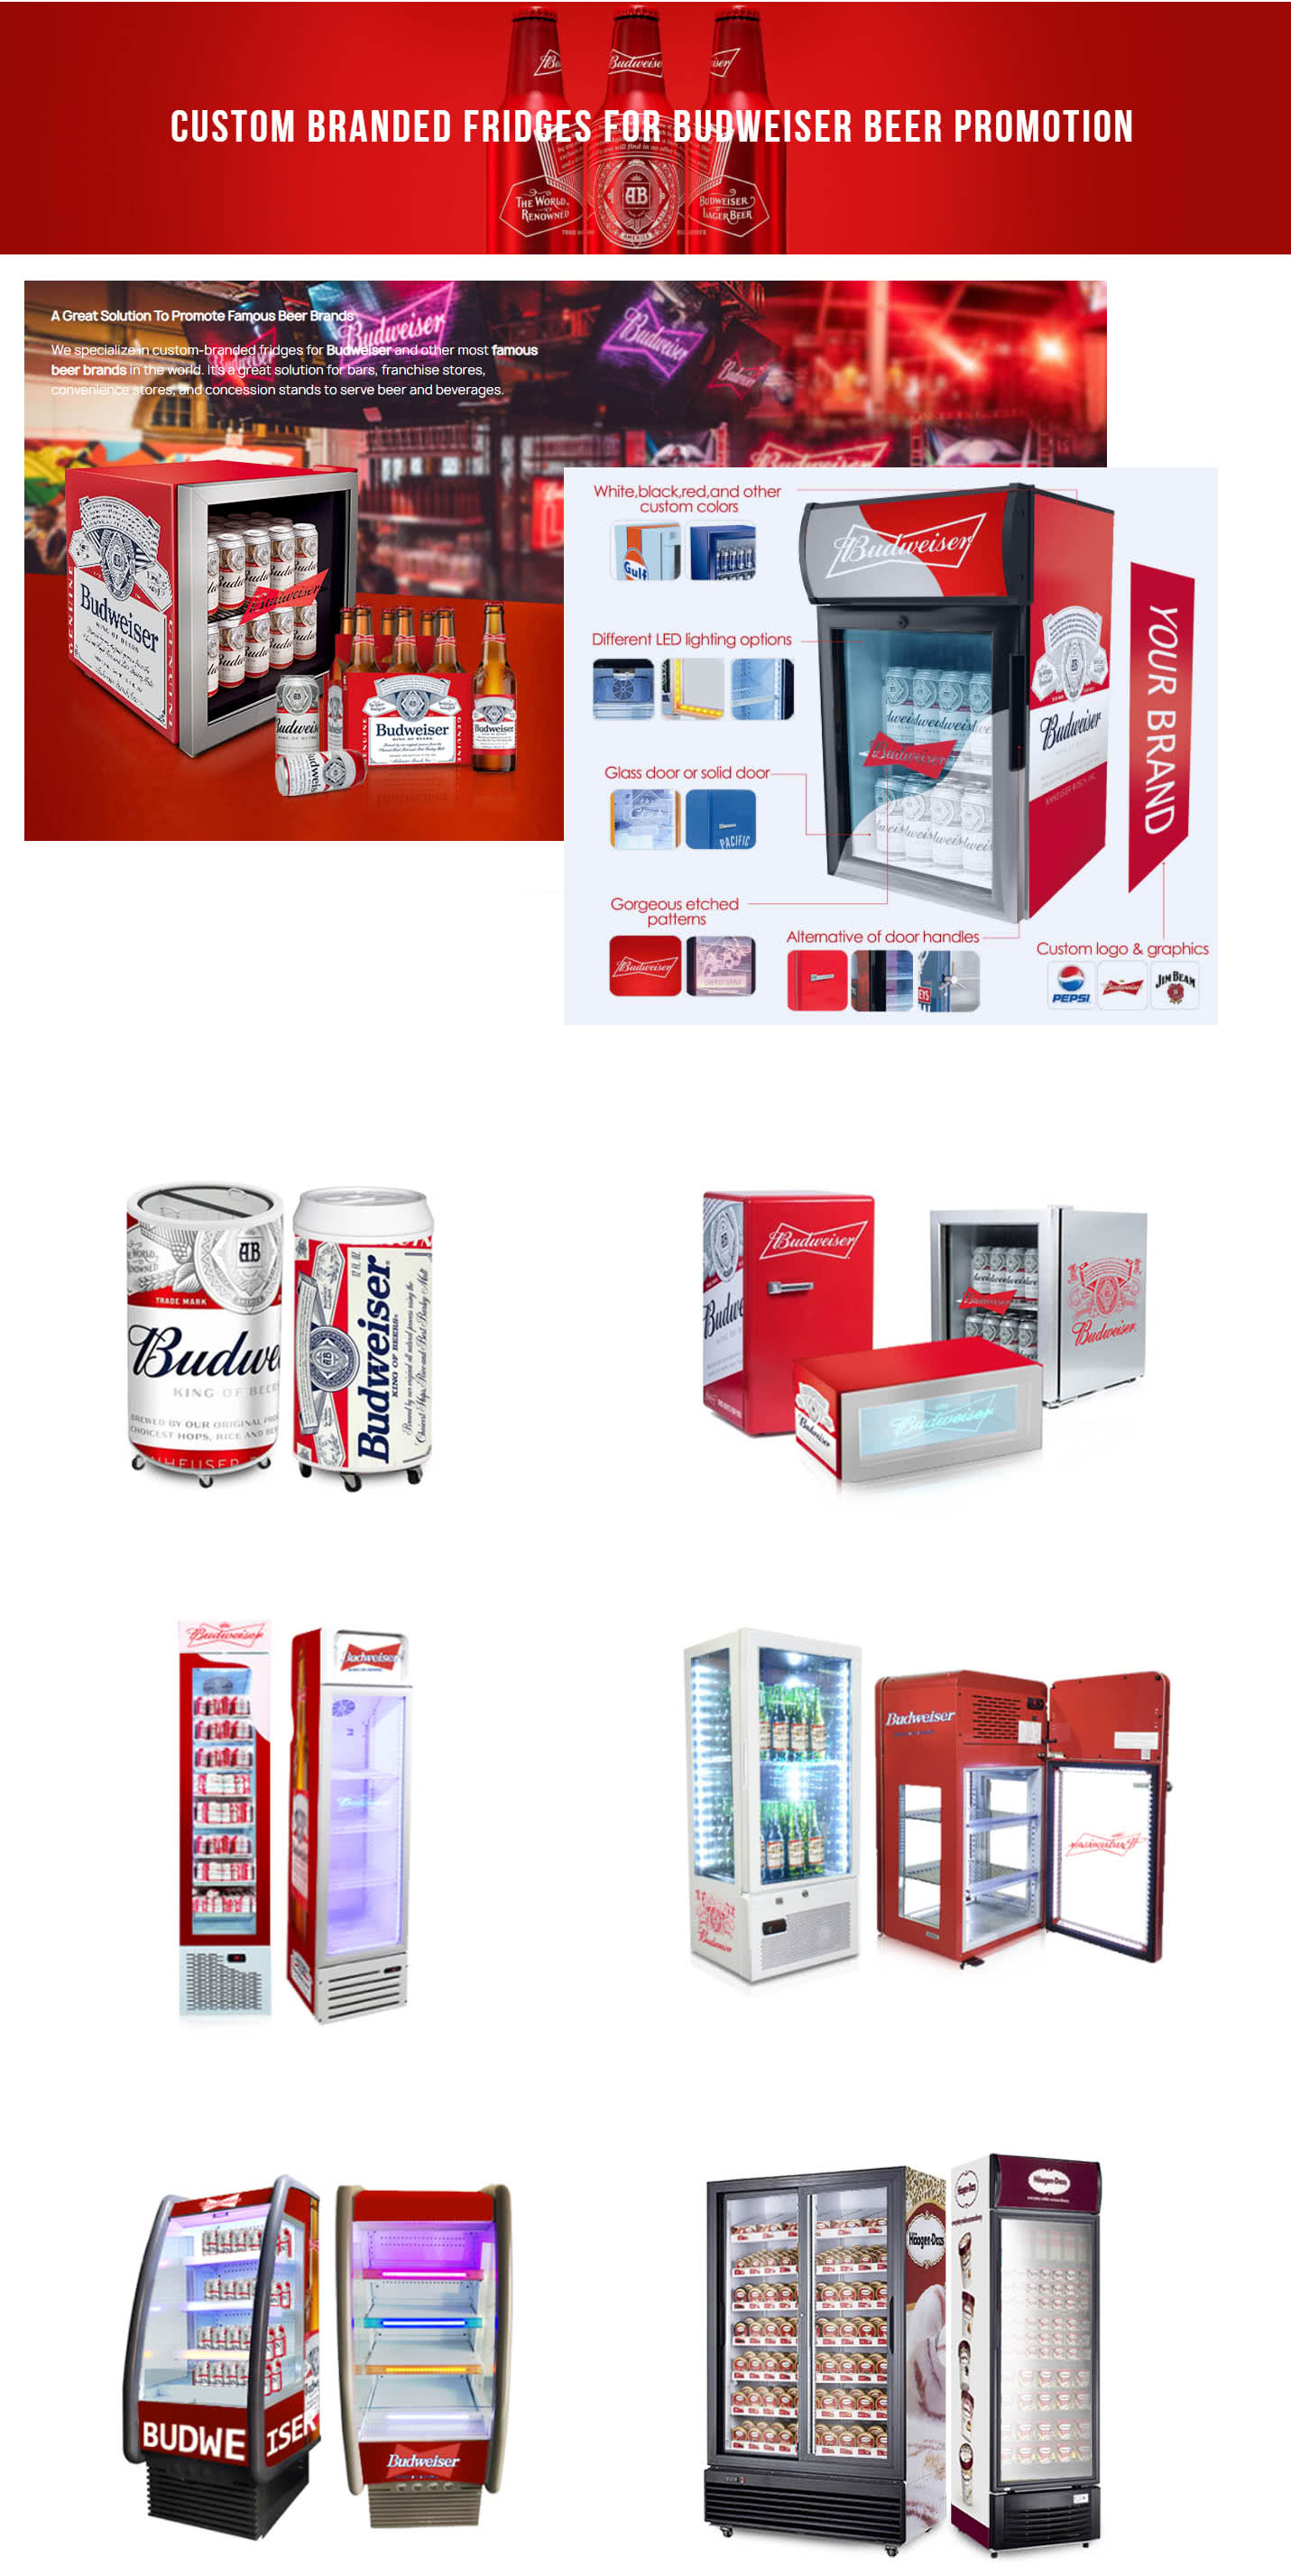 Budweiser Innovative Marketing with Eye-Catching Display Refrigerators from Nenwell Partnership